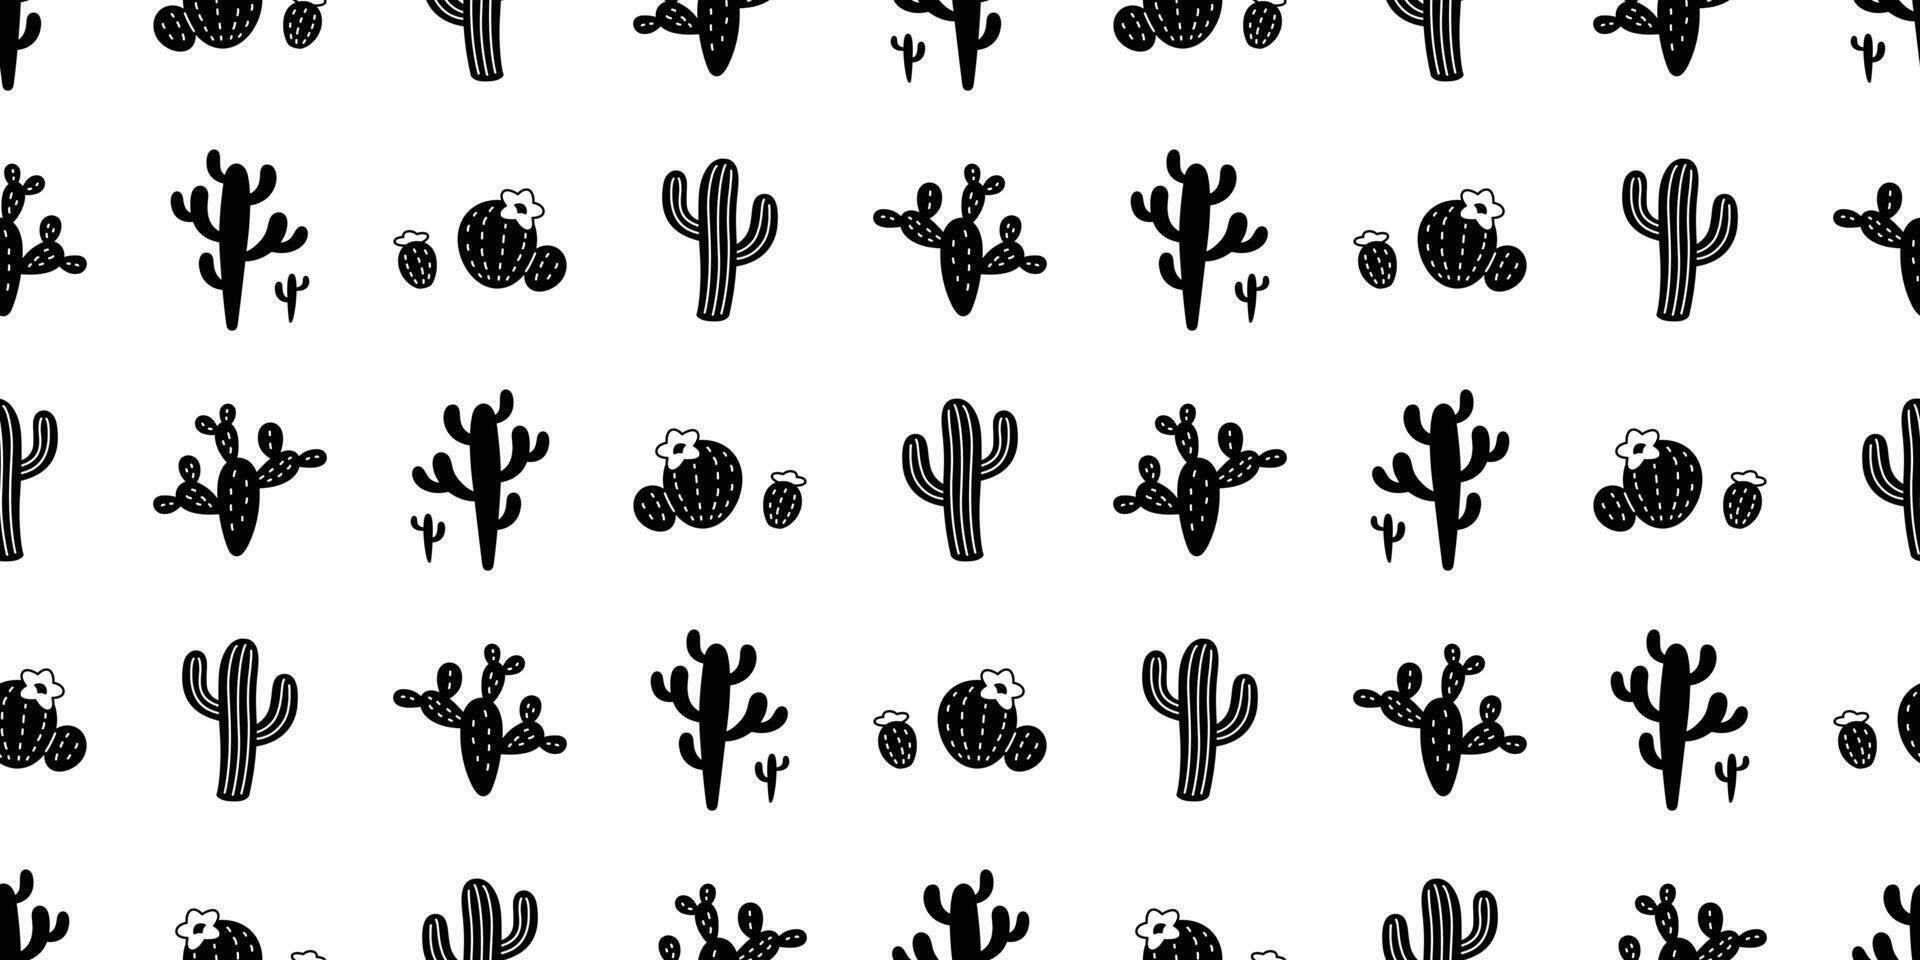 cactus seamless pattern Desert botanica flower plant garden cartoon tile wallpaper doodle repeat background scarf isolated illustration design vector